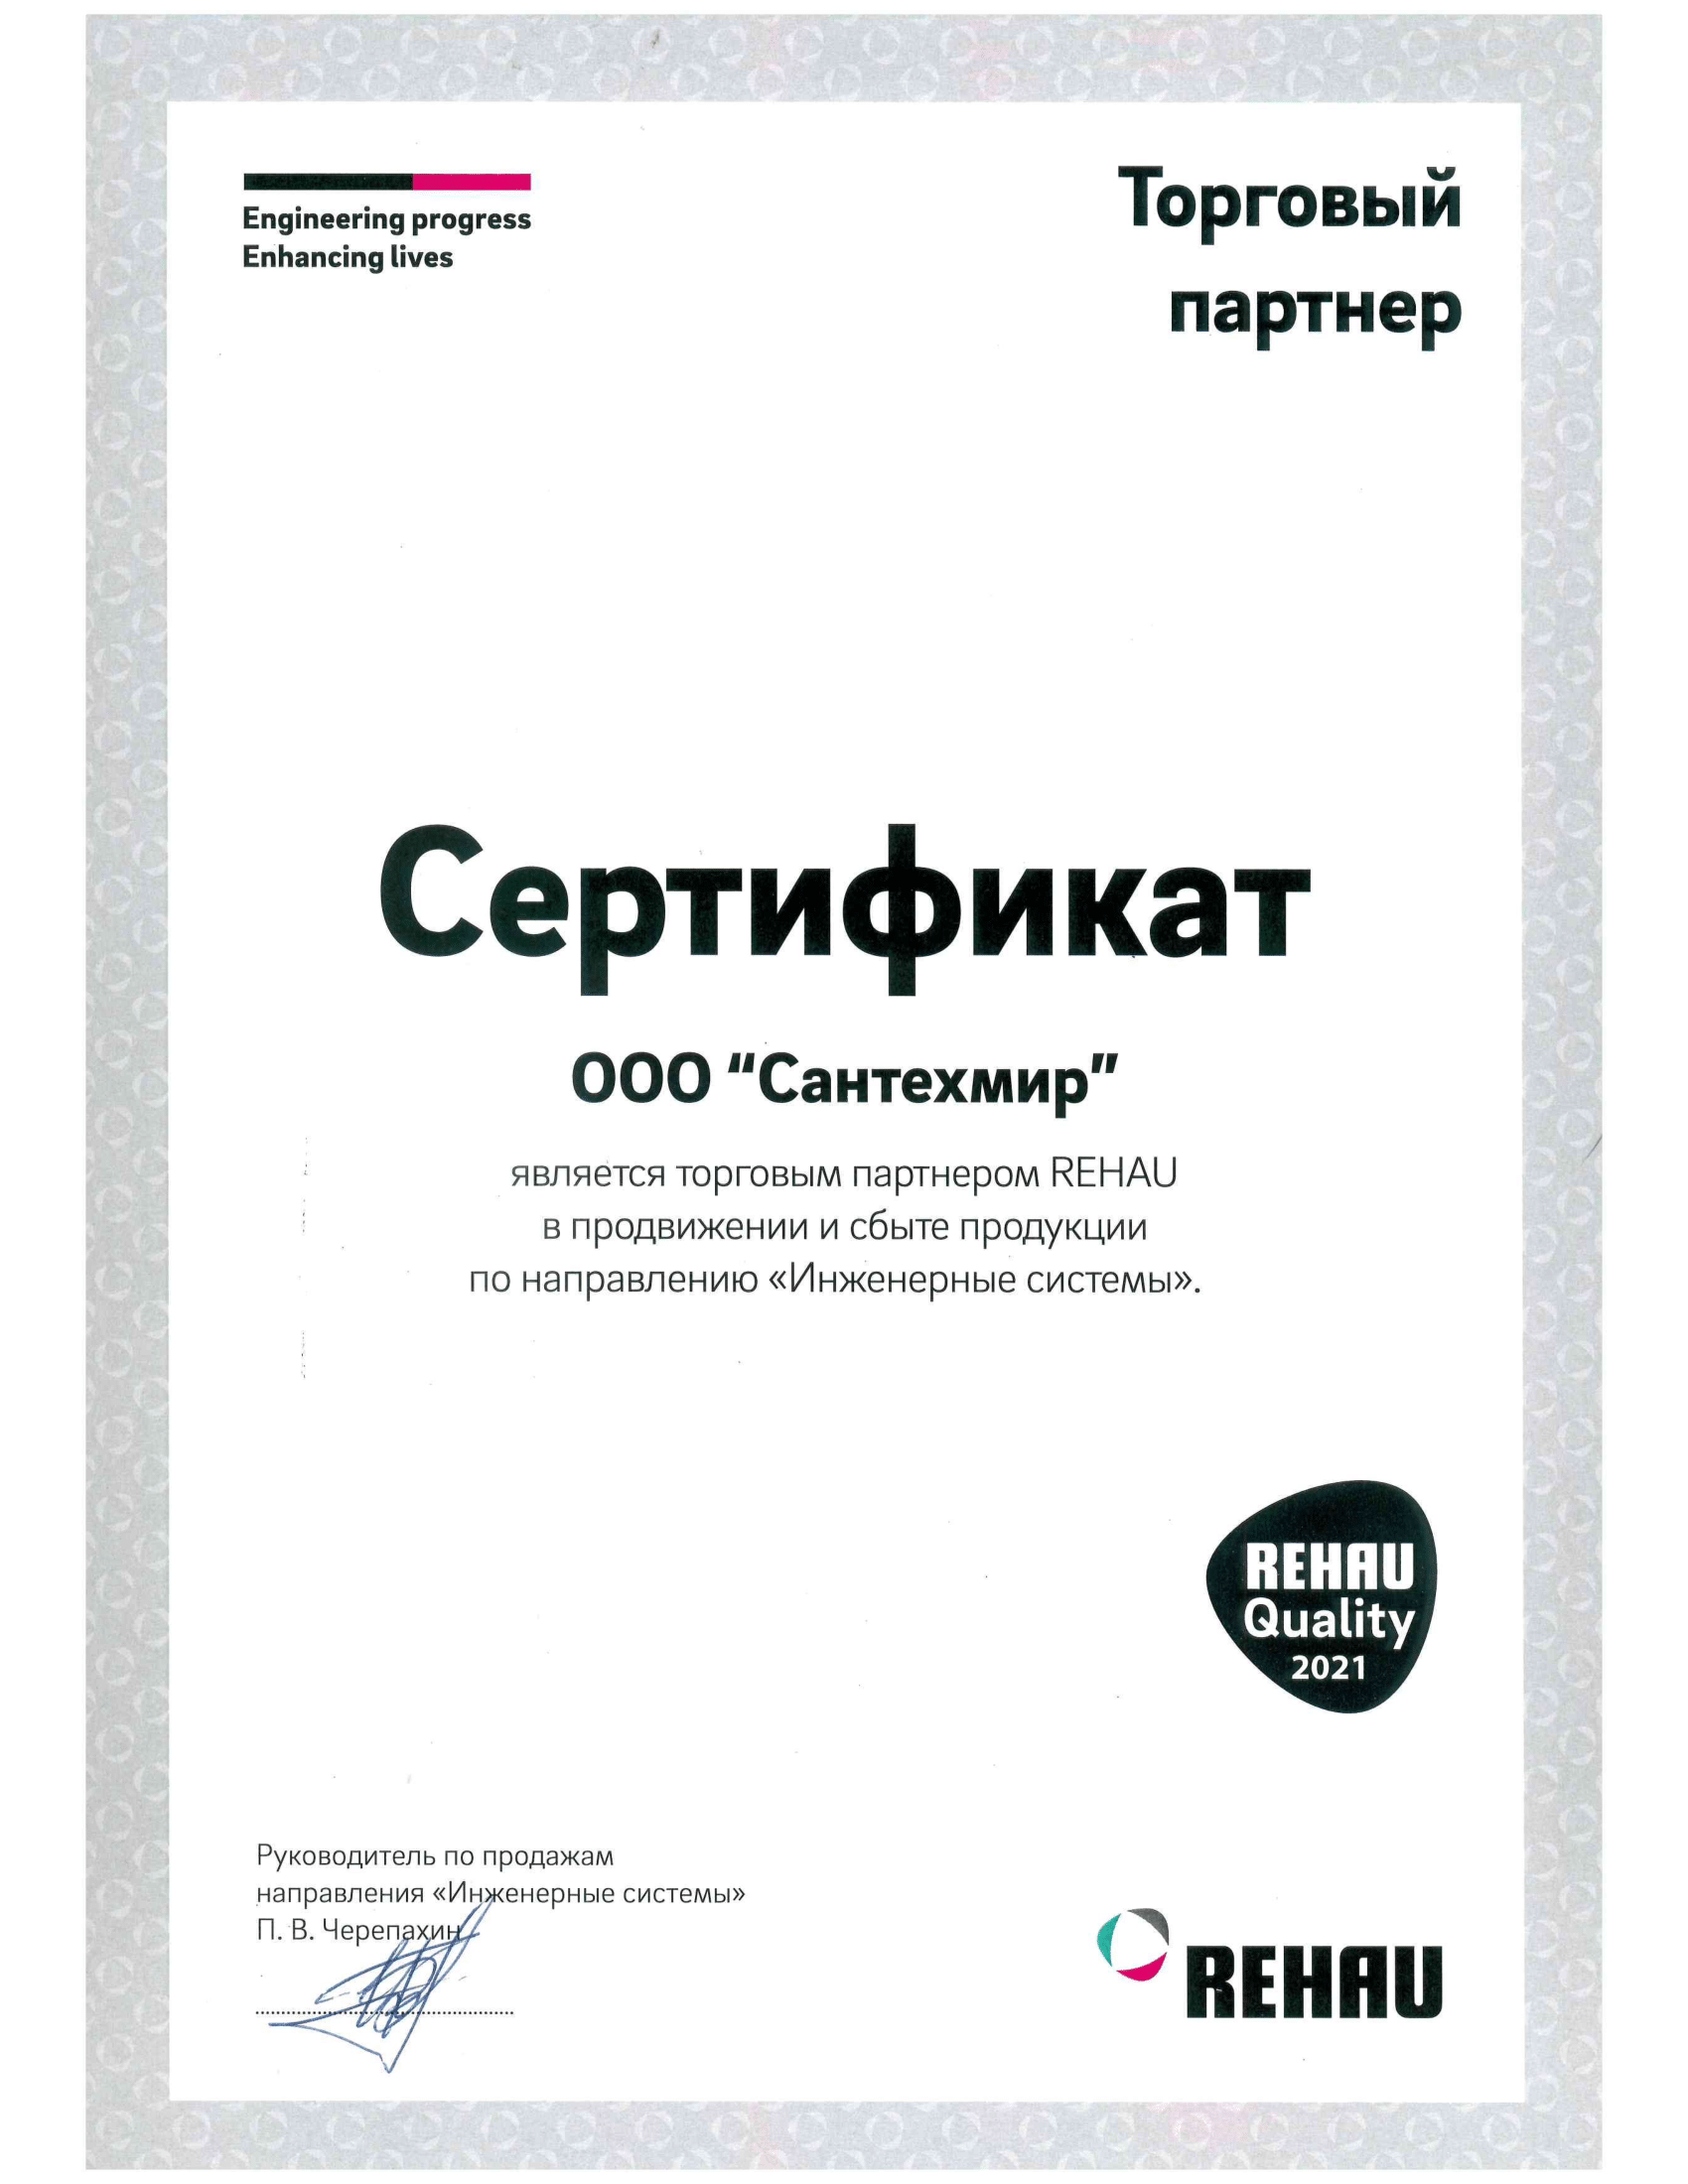 Rehau (сертификат за 2021 год)